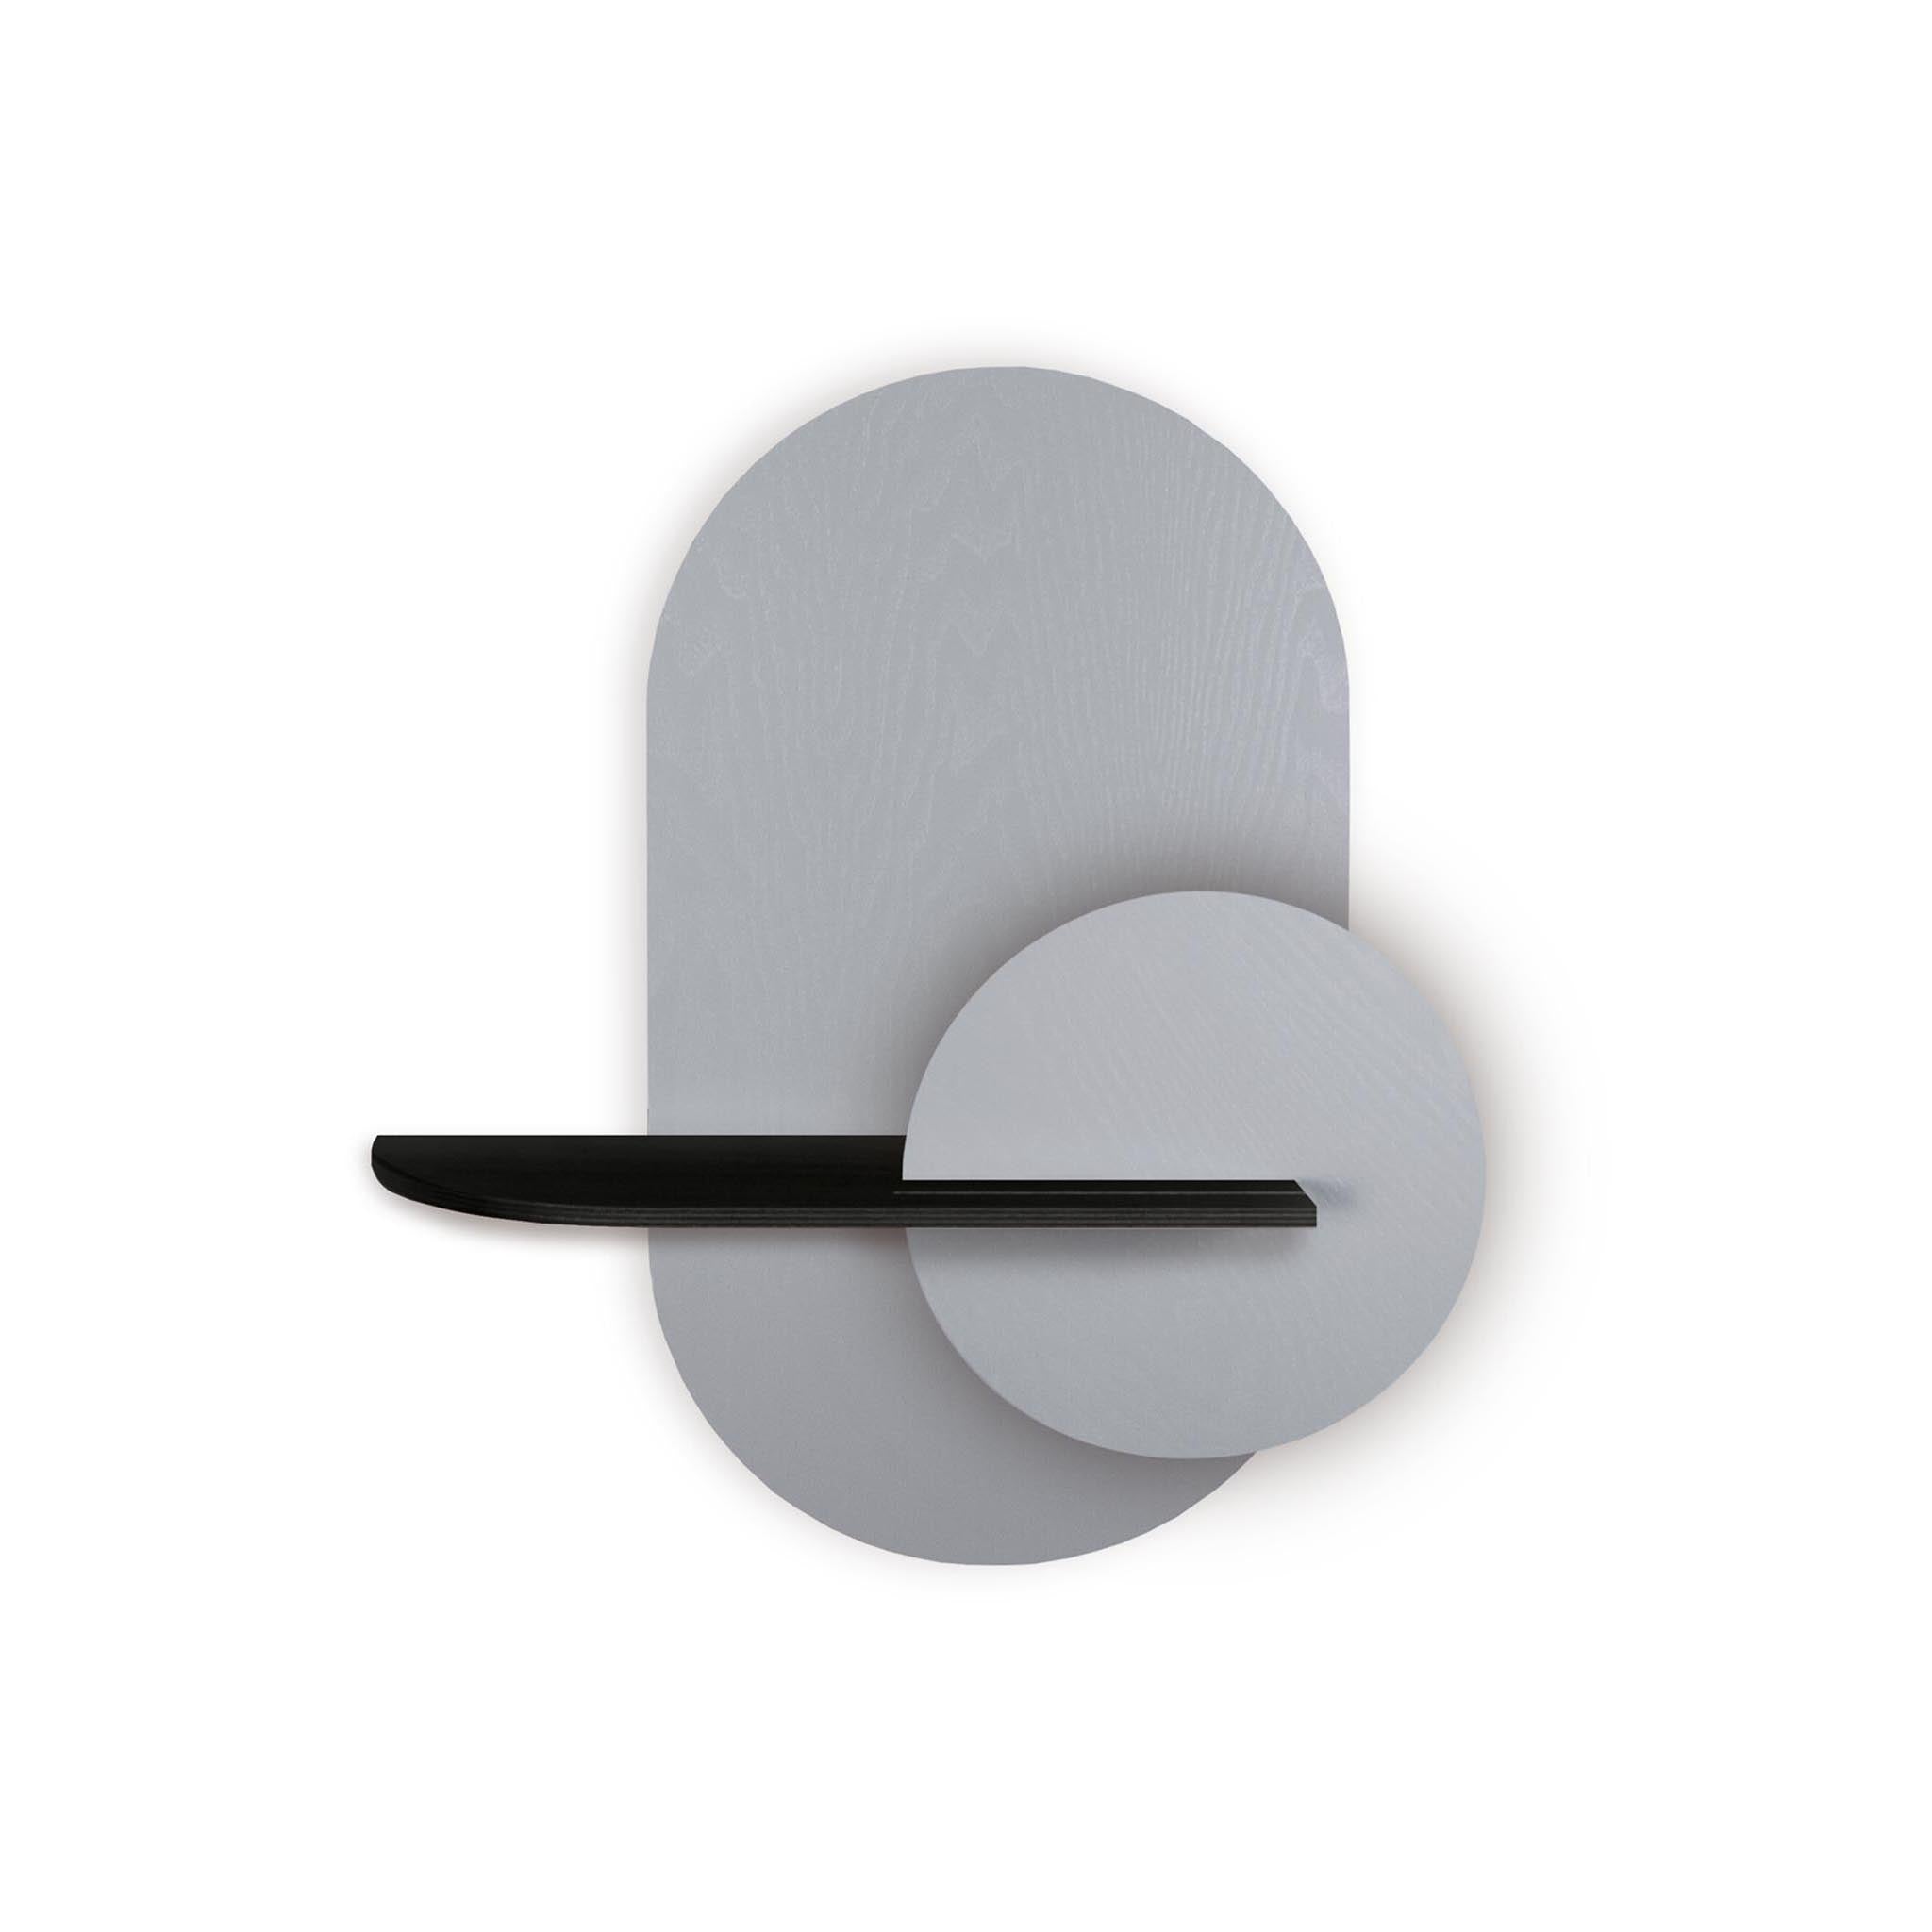 Alba wall shelf · Grey oval